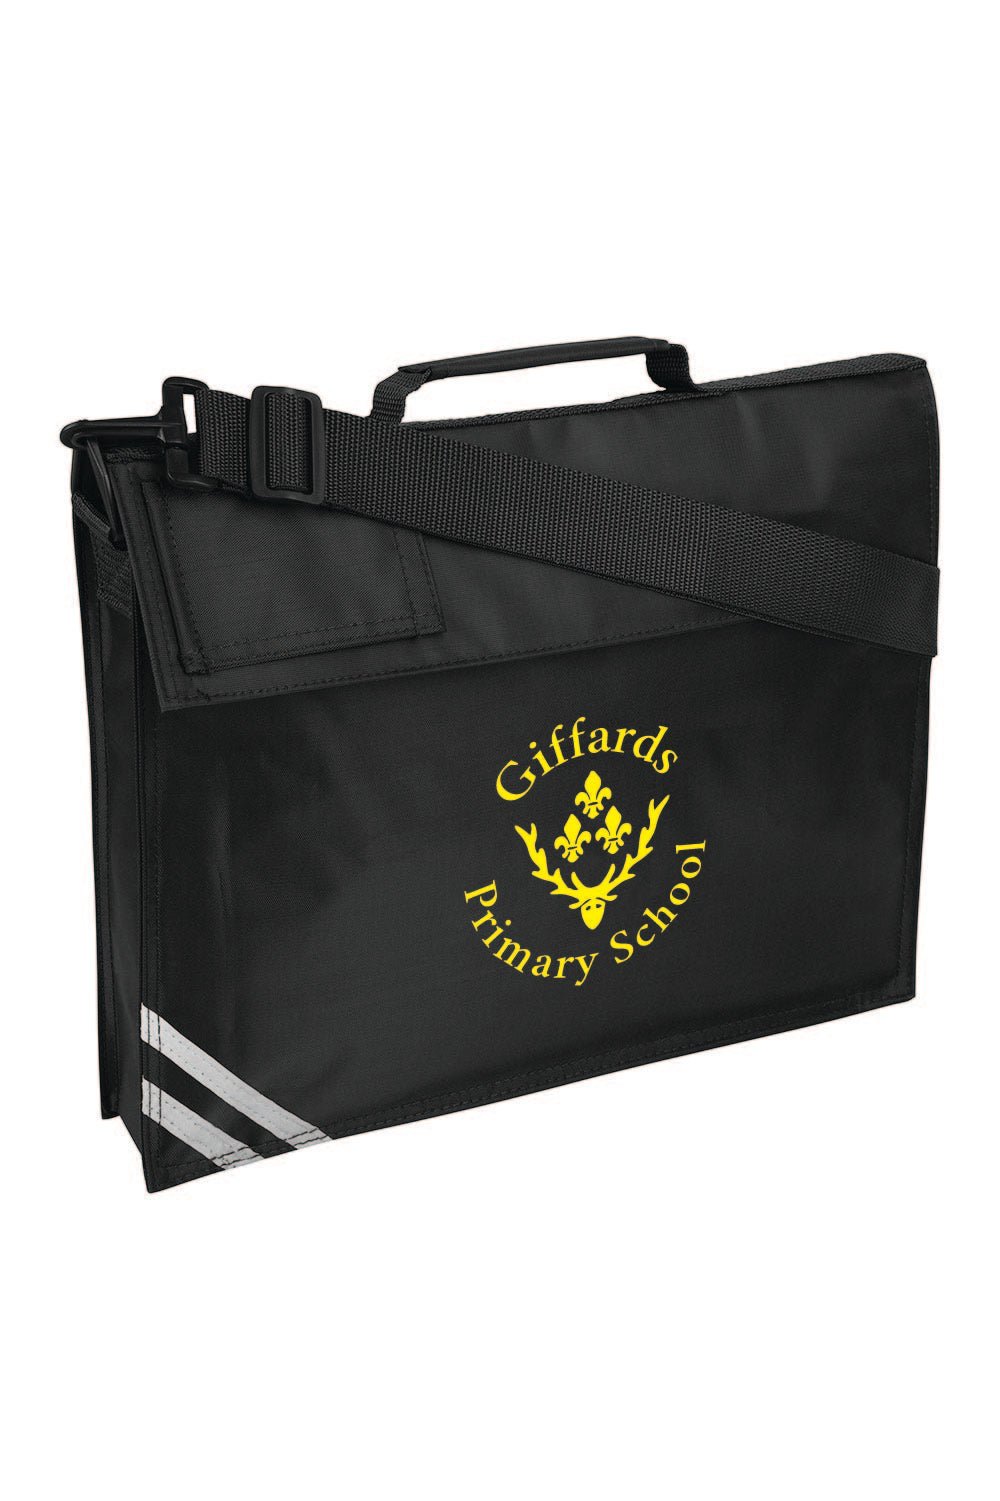 Giffards Primary Bookbag with Personalisation - Uniformwise Schoolwear